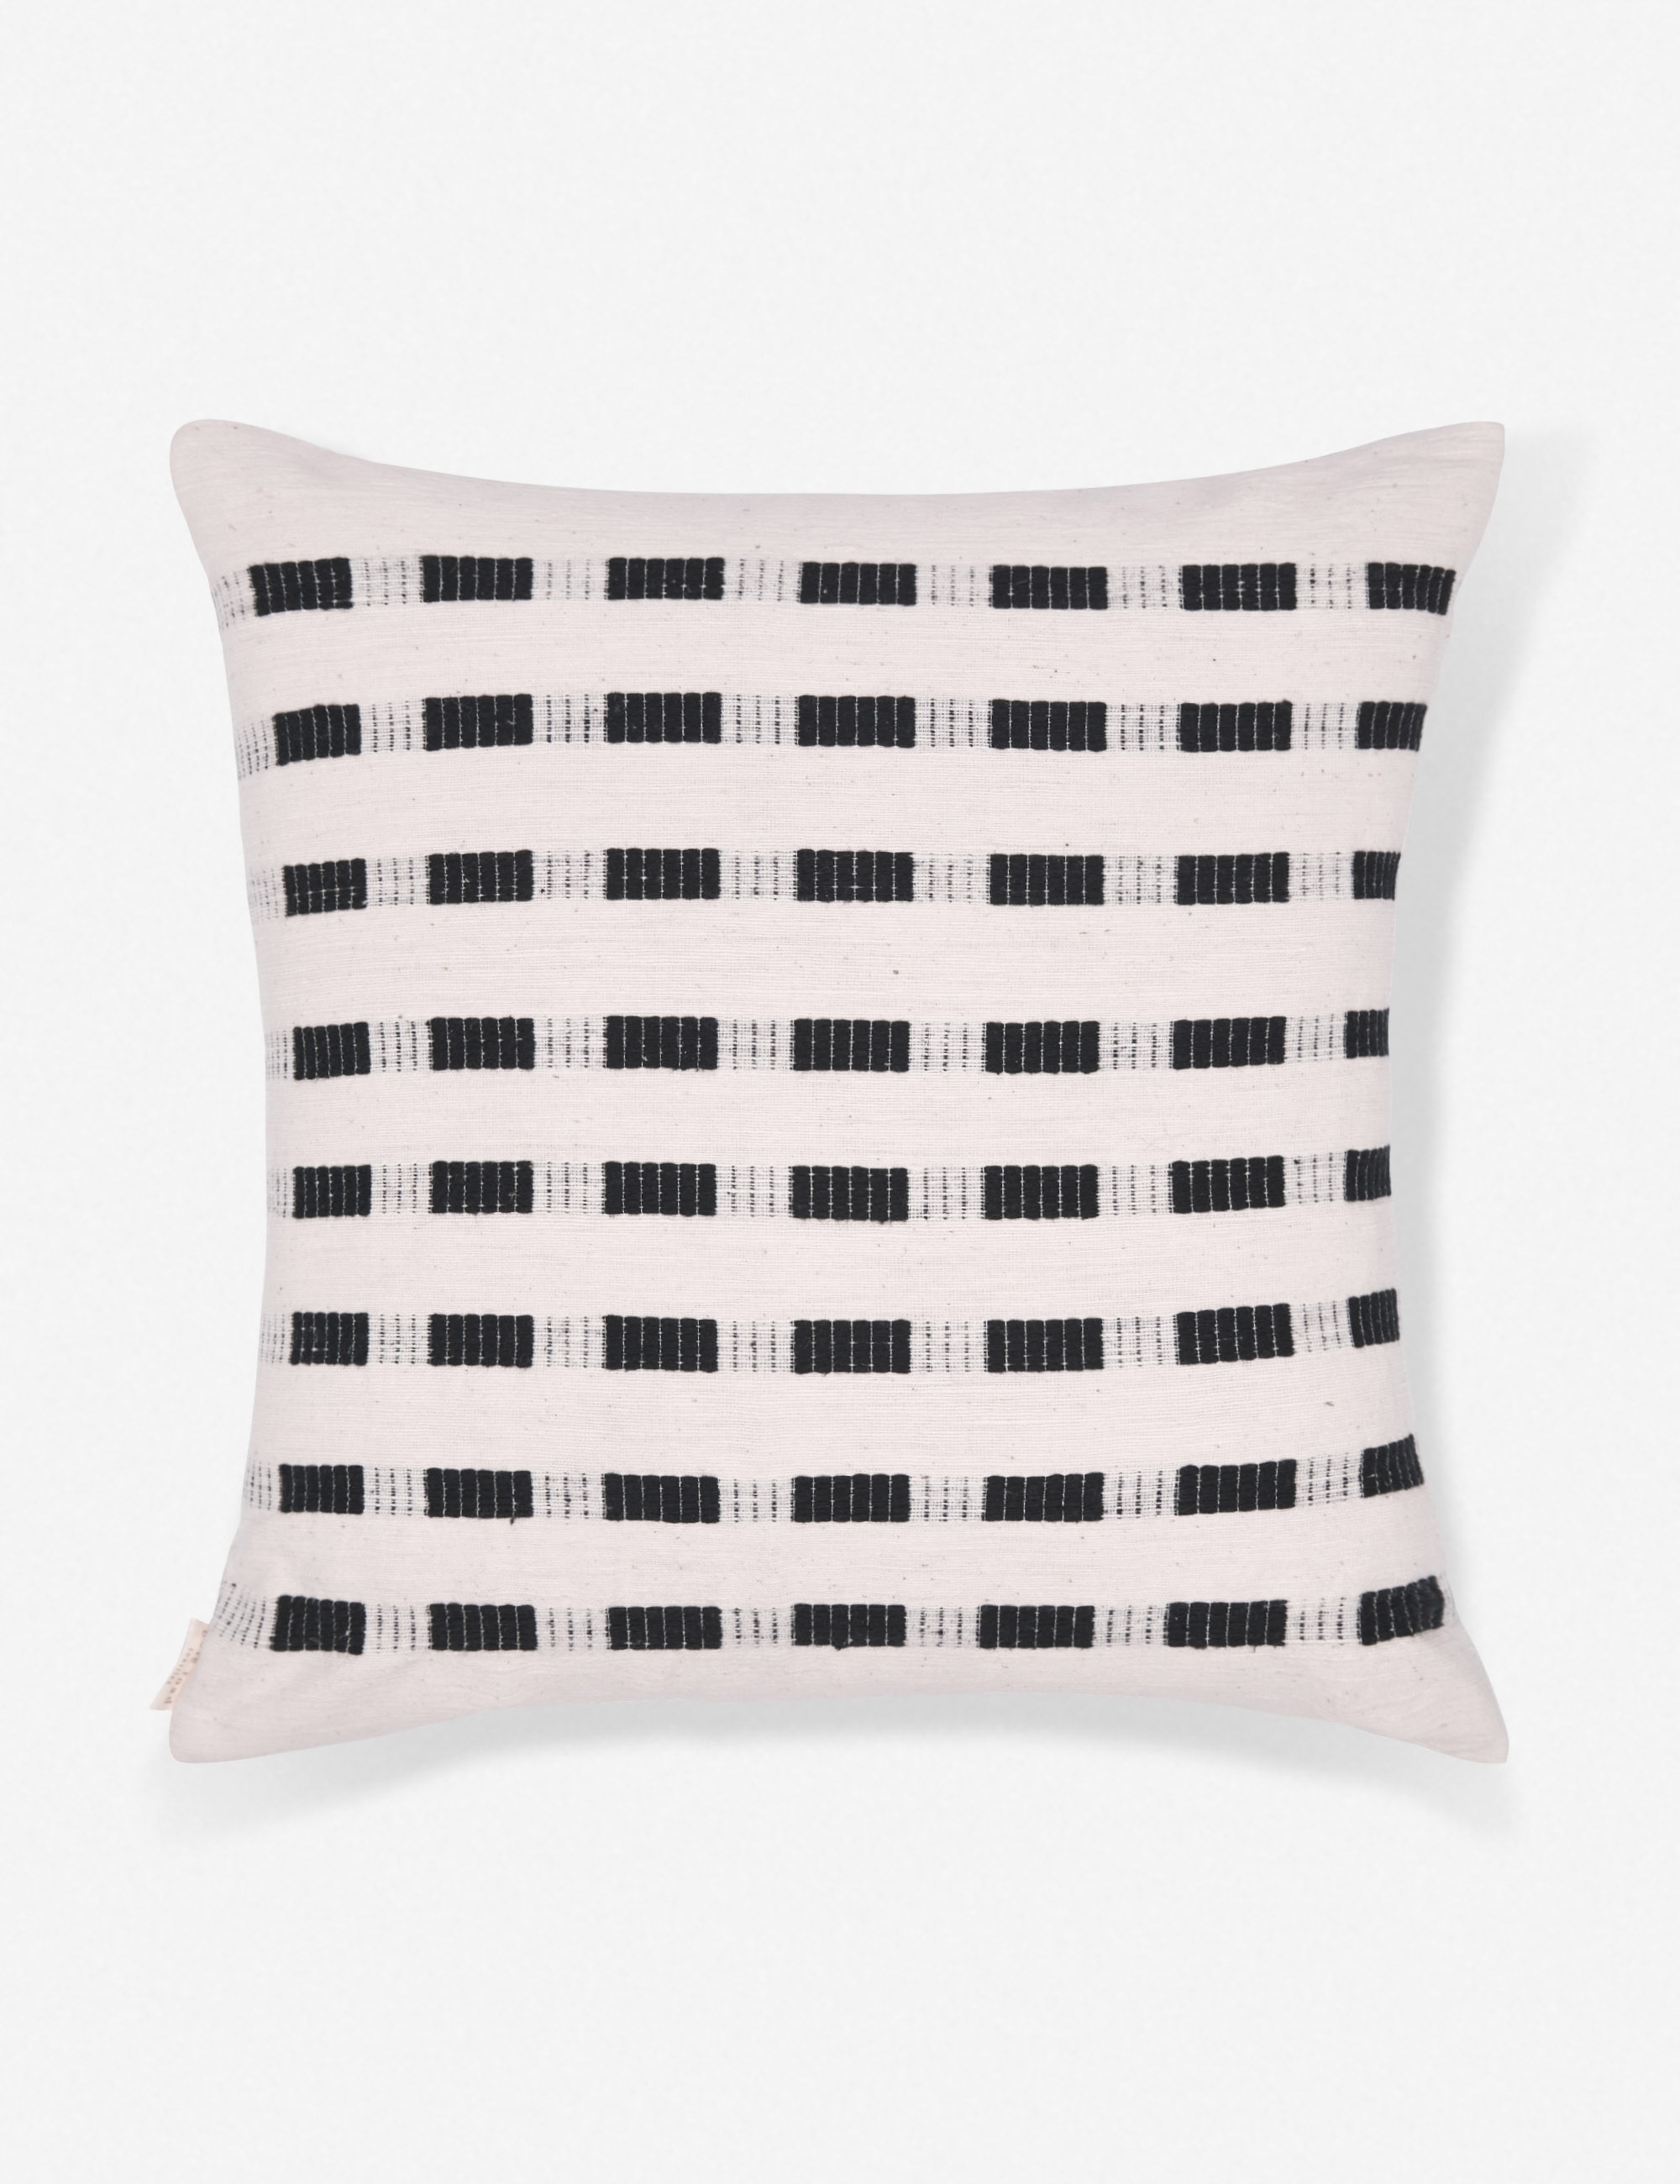 Bolé Road Textiles Bertu Pillow, Onyx, 20" x 20" - Image 0